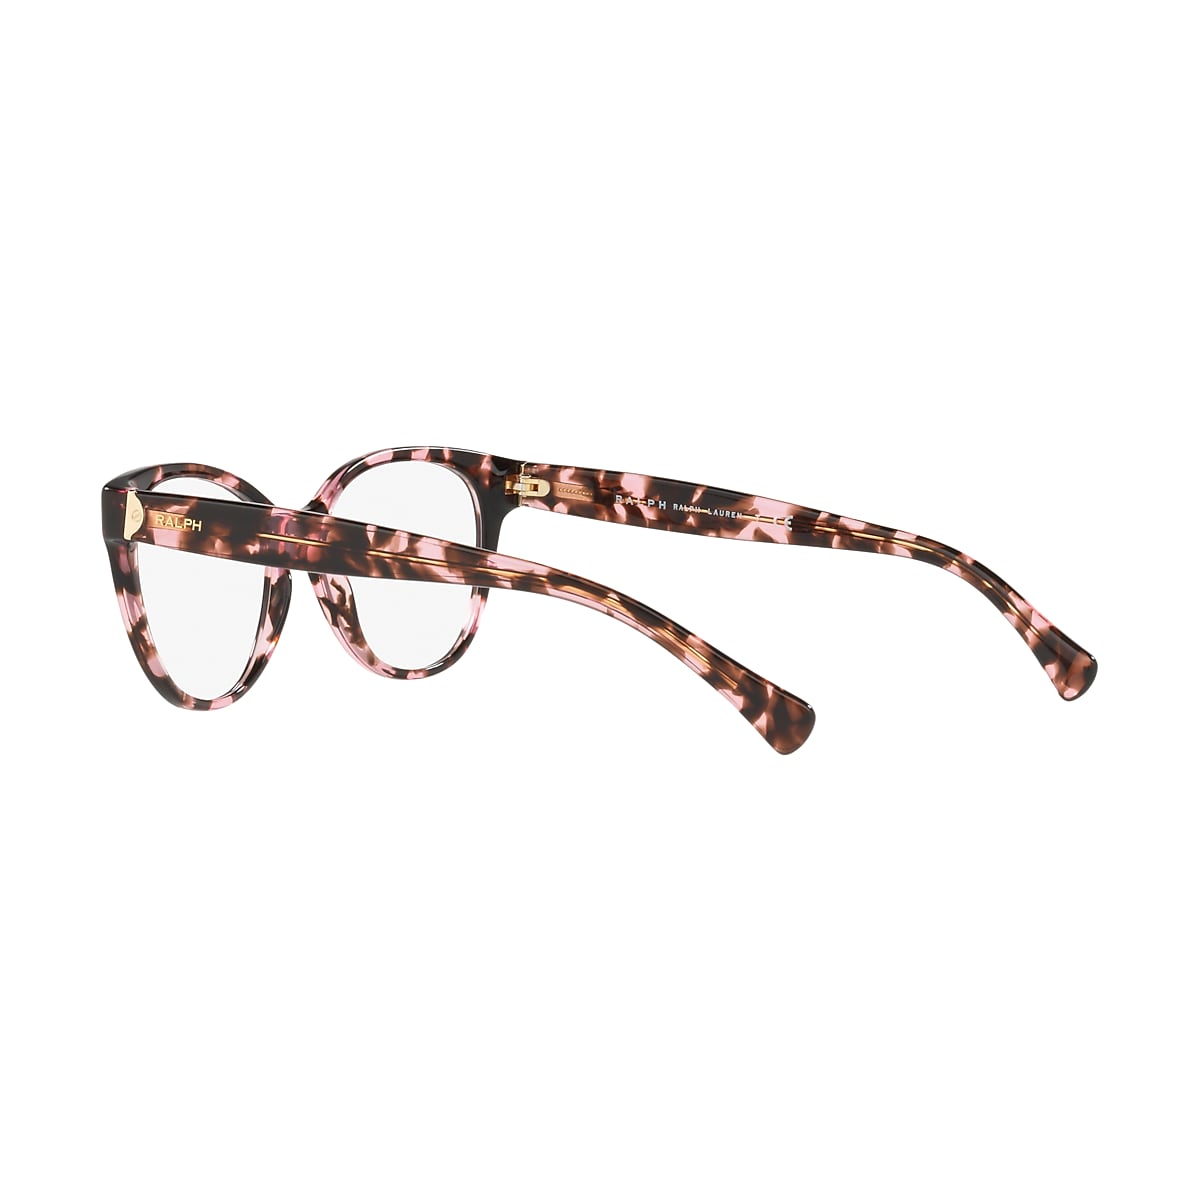 Ralph 0RA7103 Glasses in Pink/purple | Target Optical